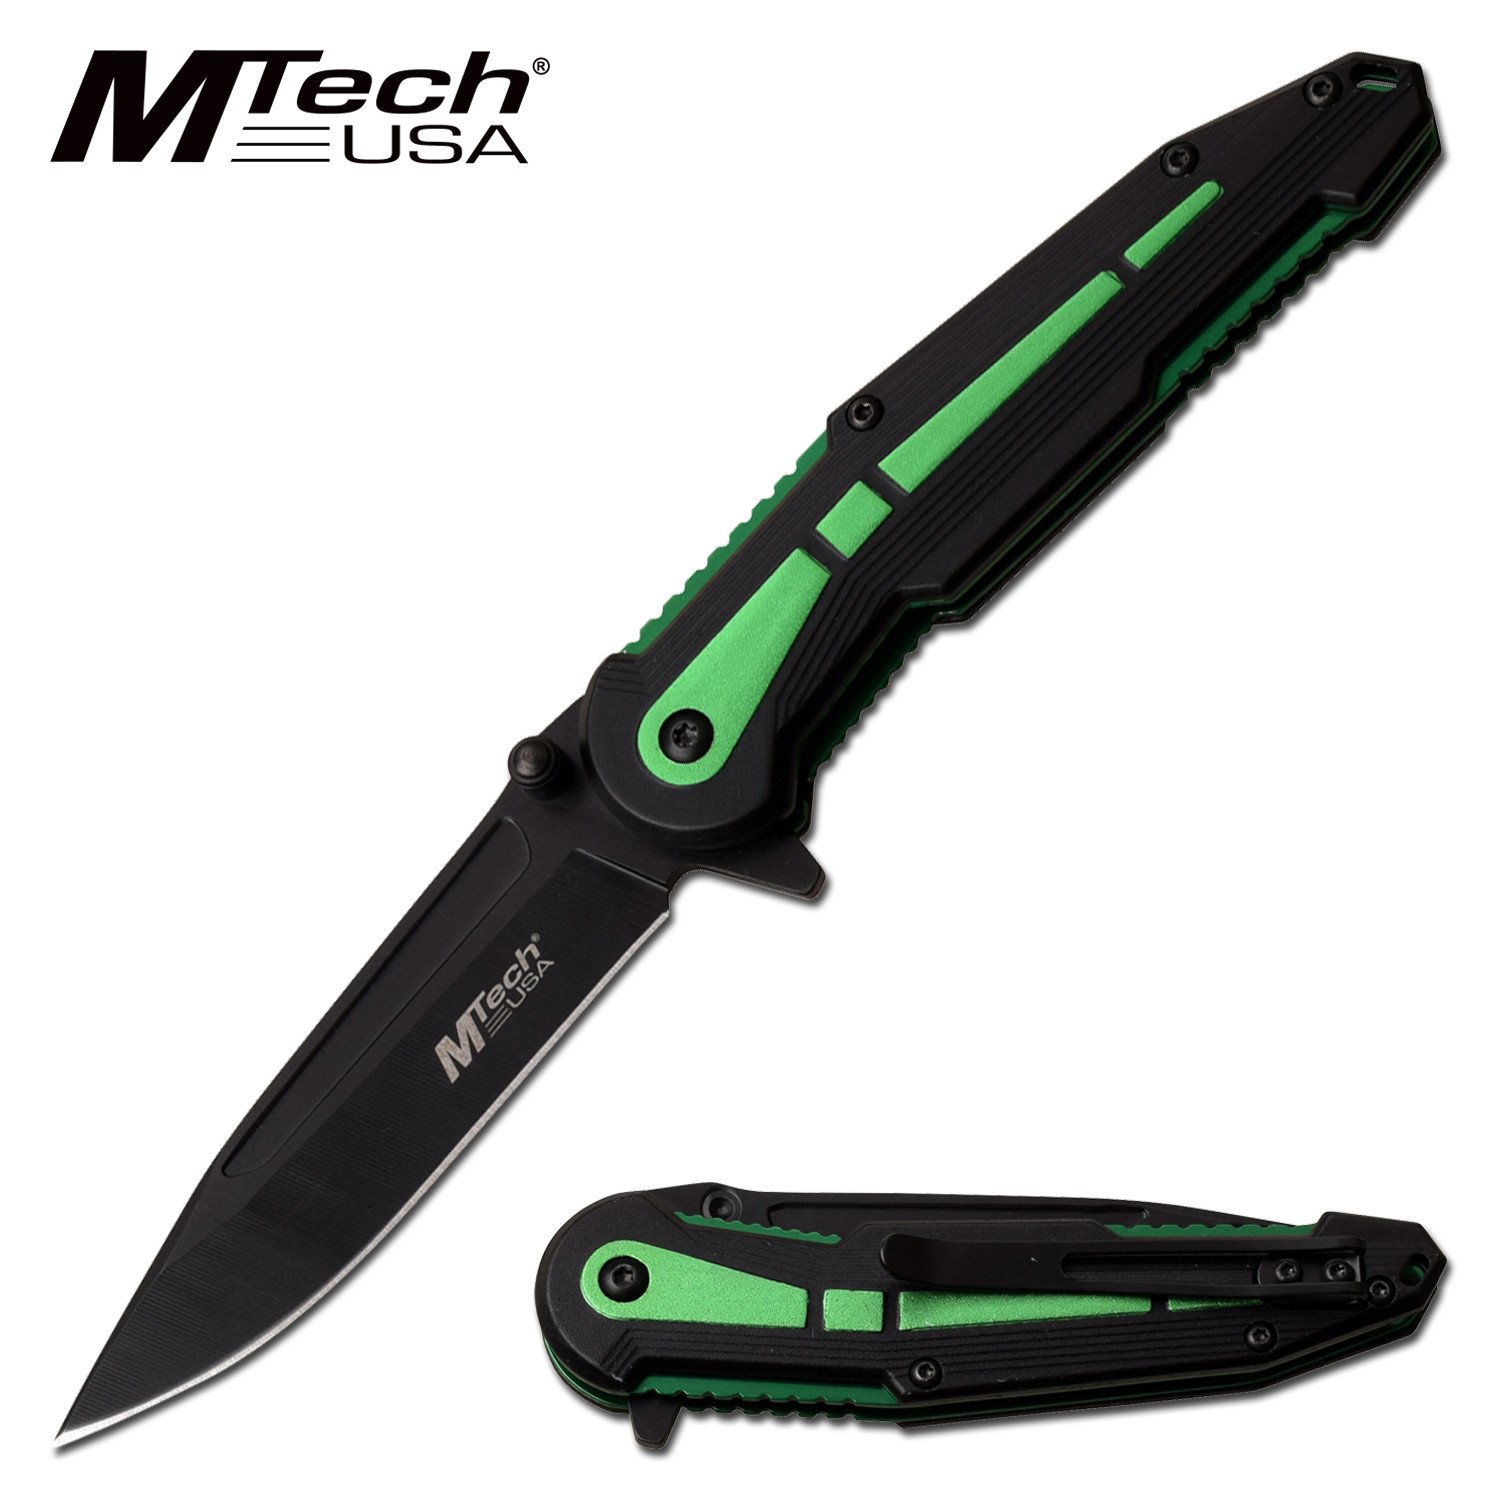 Spring-Assist Folding Knife Mtech Black 3.5in. Blade Slim Tactical EDC Green